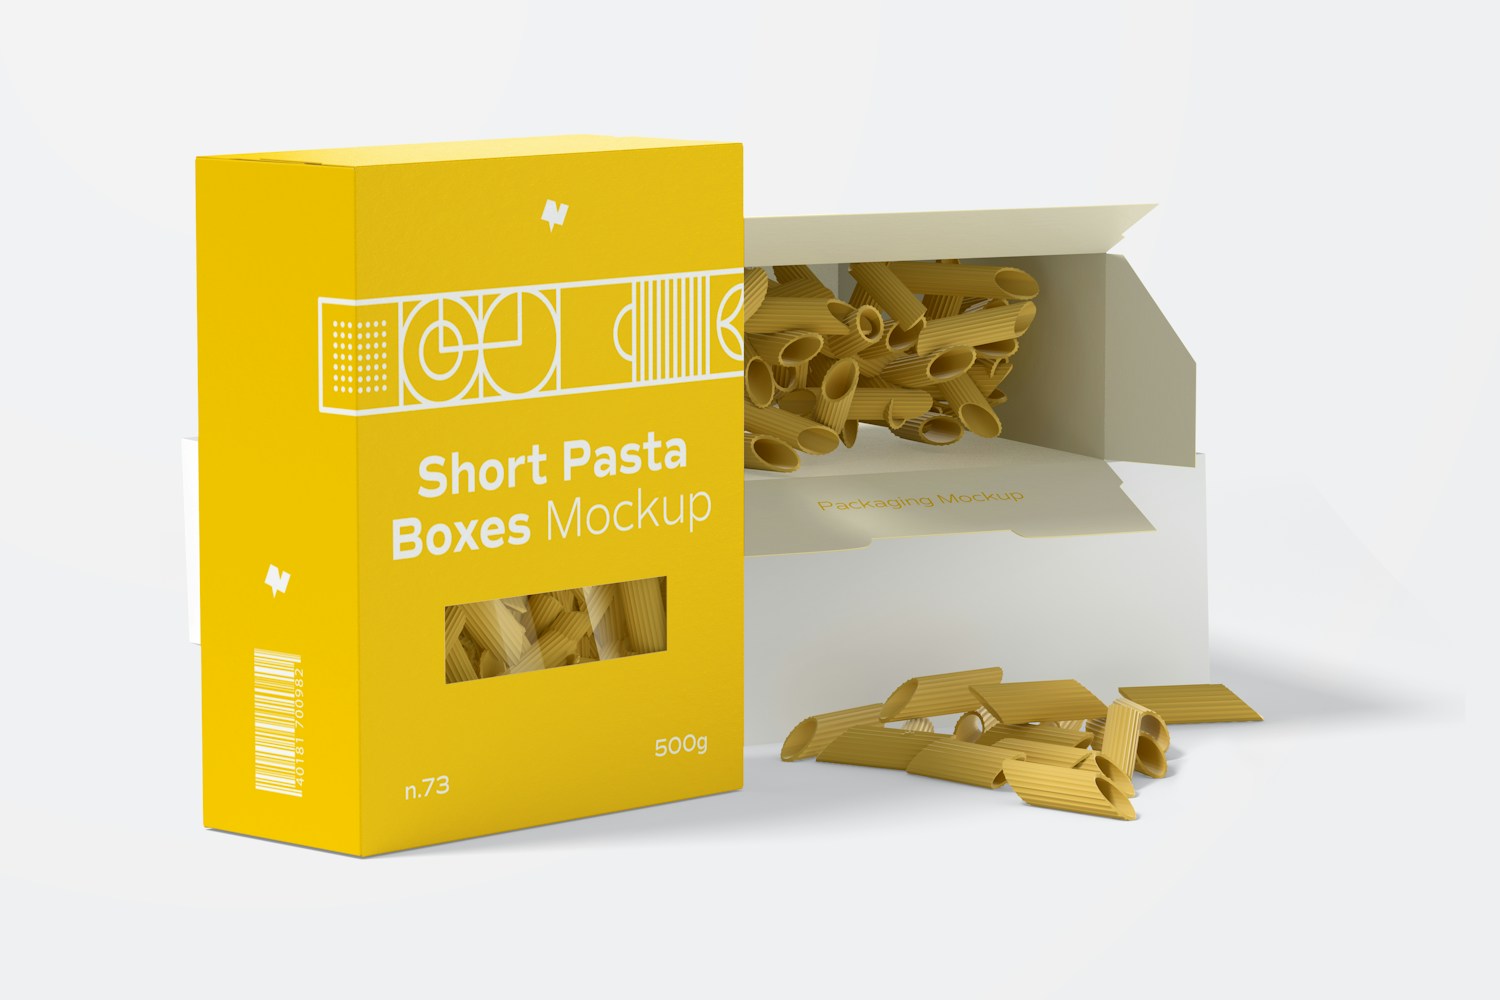 Short Pasta Boxes Mockup, Perspective